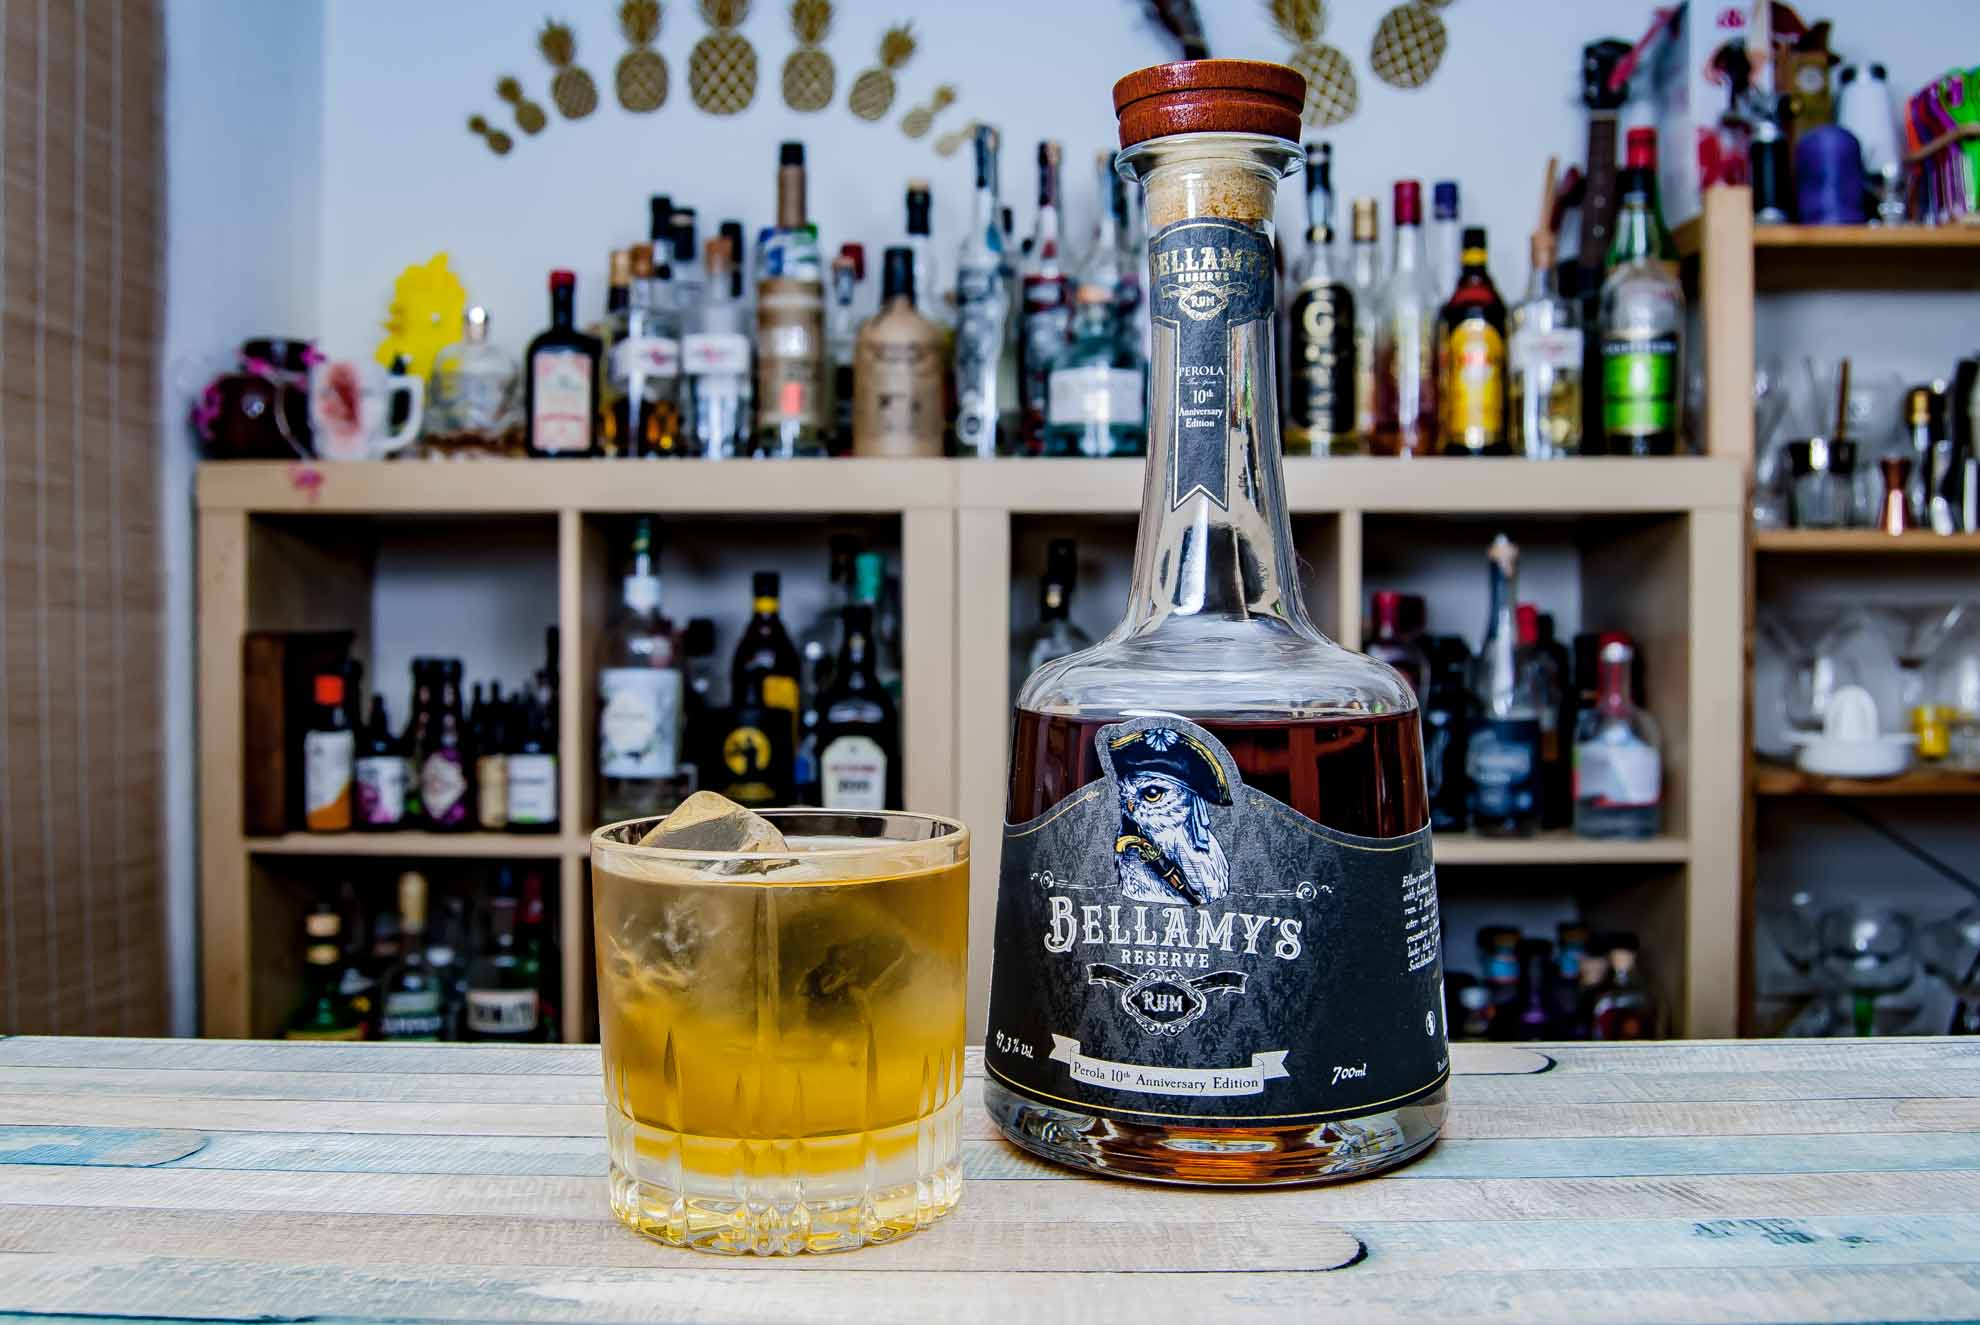 Bellamy's Reserve Rum Perola 10th Anniversary Edition in Pandemonium Cocktail.